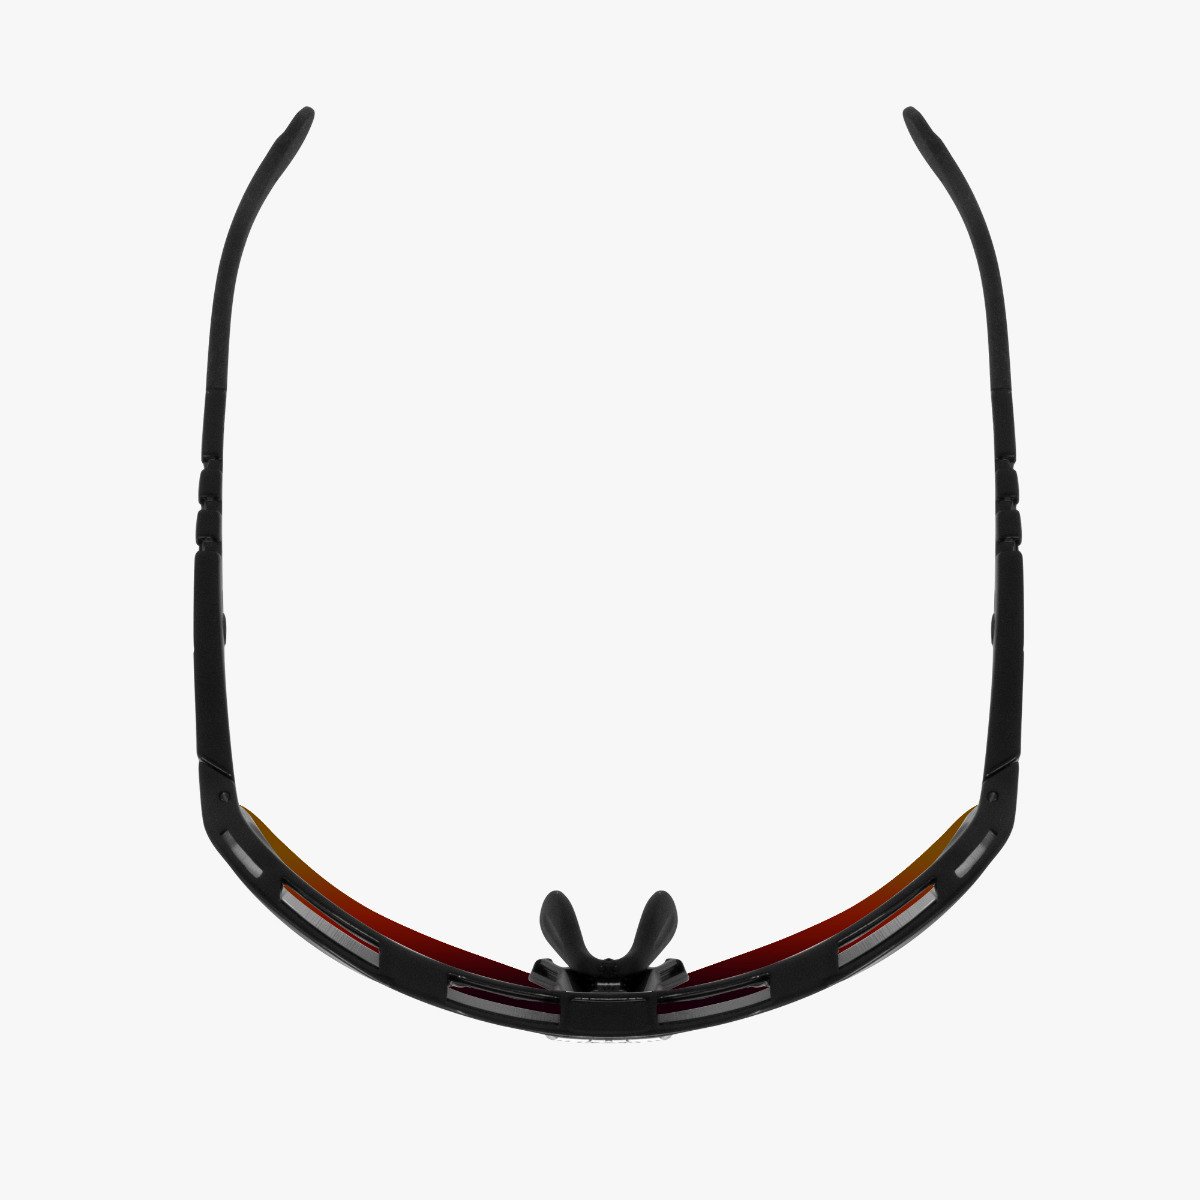 Scicon Sports | Aeroshade Kunken Performance Sunglasses - Black White Gloss / Multimirror Red Monogram - EY31131300